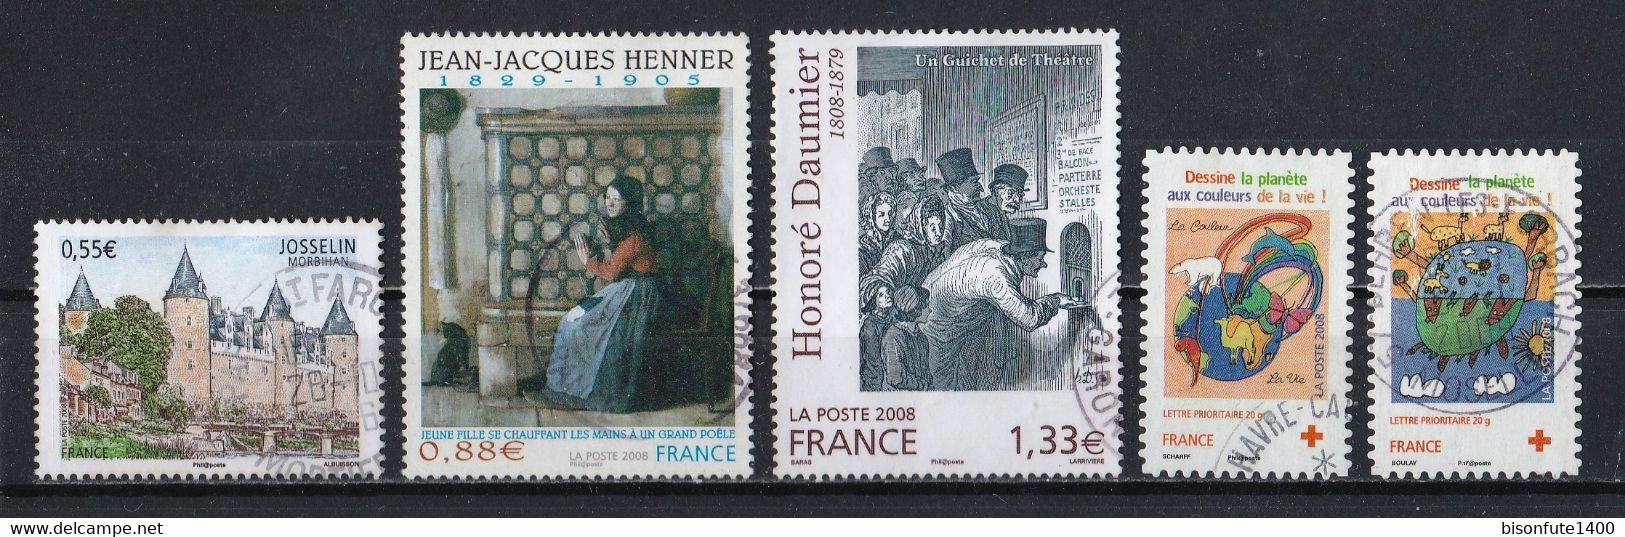 France 2008 : Timbres Yvert & Tellier N° 4281 - 4286 - 4305 - 4306 Et 4307 Avec Oblitérations Rondes. - Used Stamps